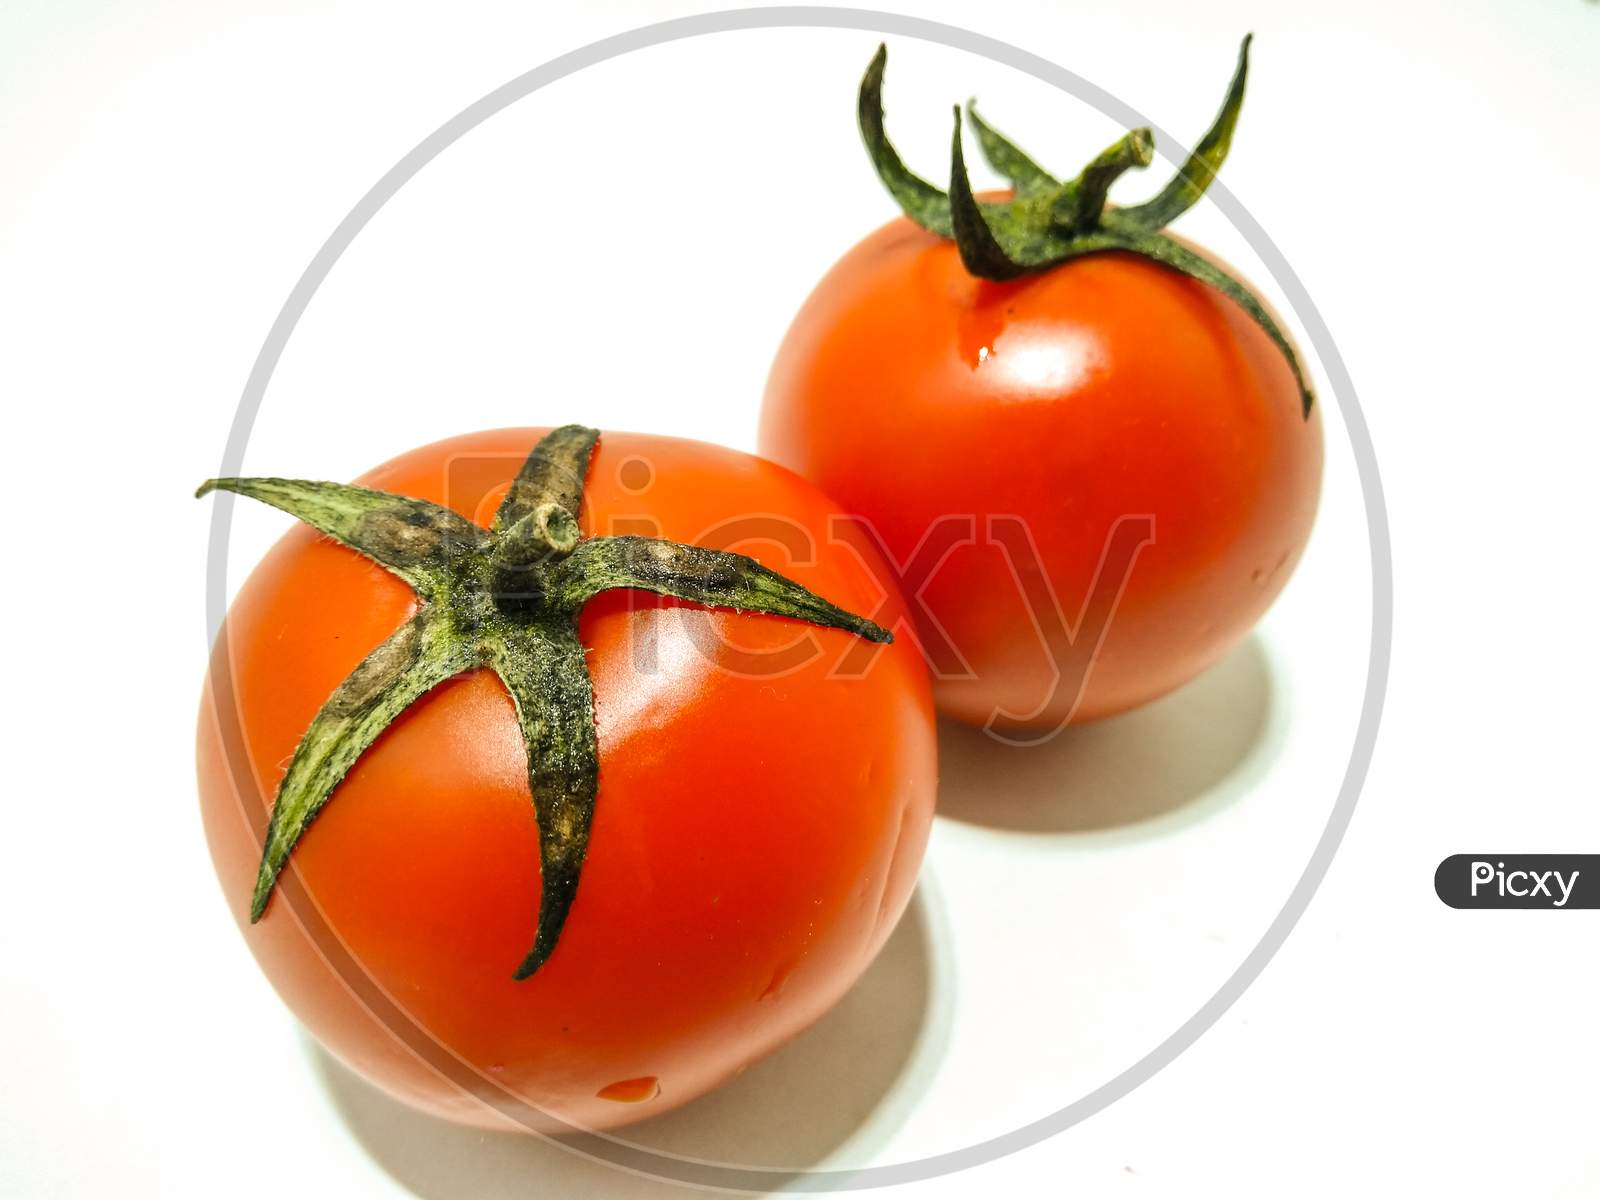 A picture of fresh tomato